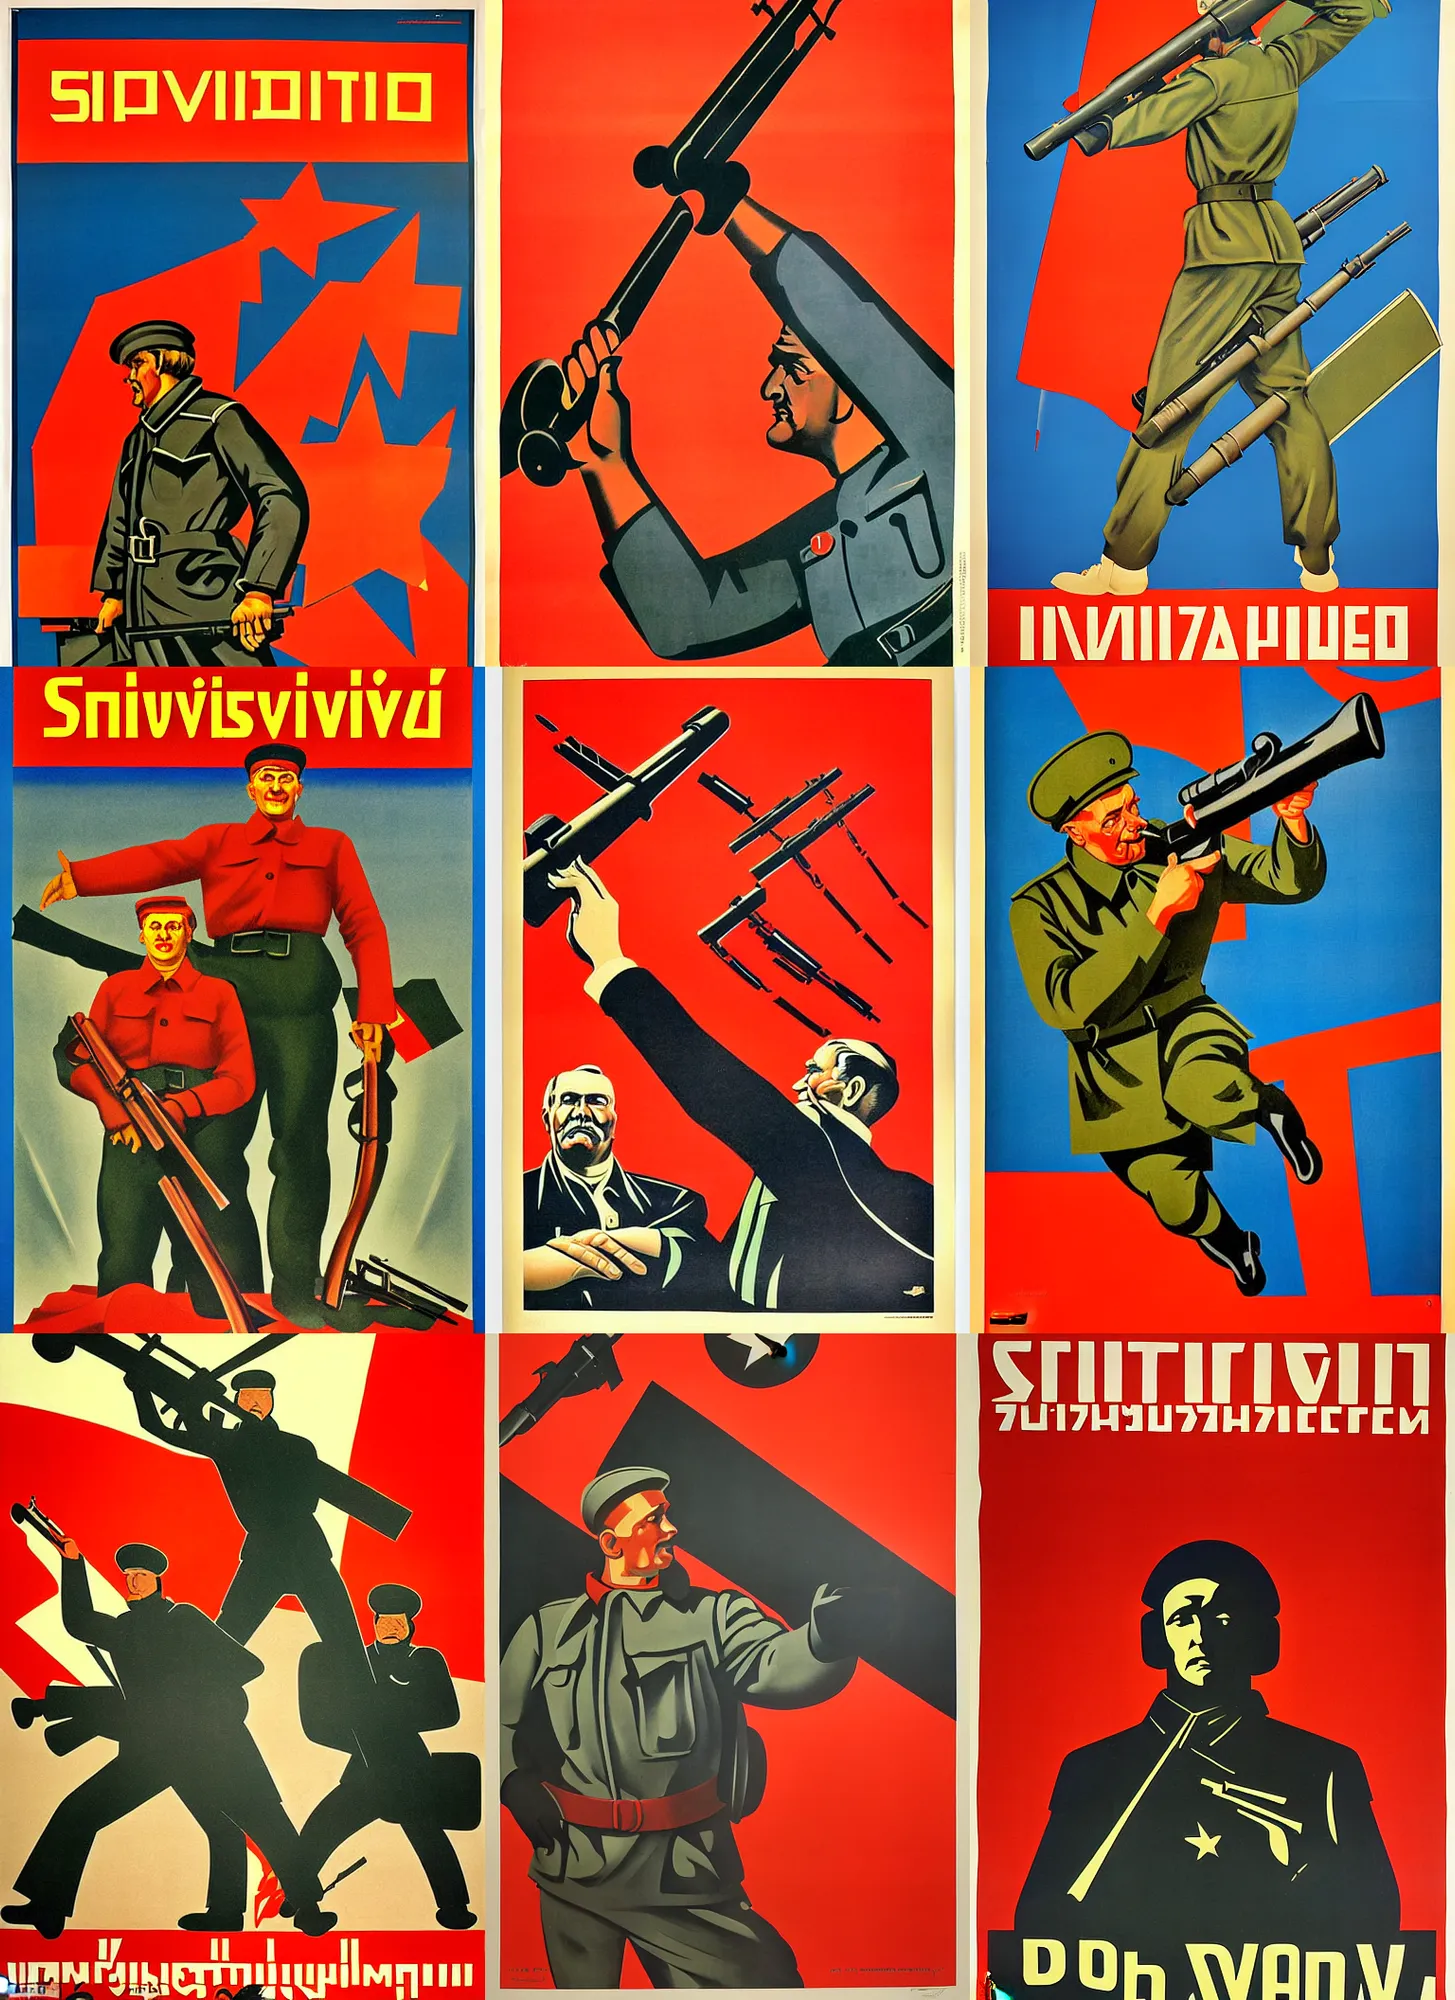 Prompt: soviet propaganda poster of the svd - s, socialist realism. by alexander zelensky, viktor deni, havrylo pustoviyt